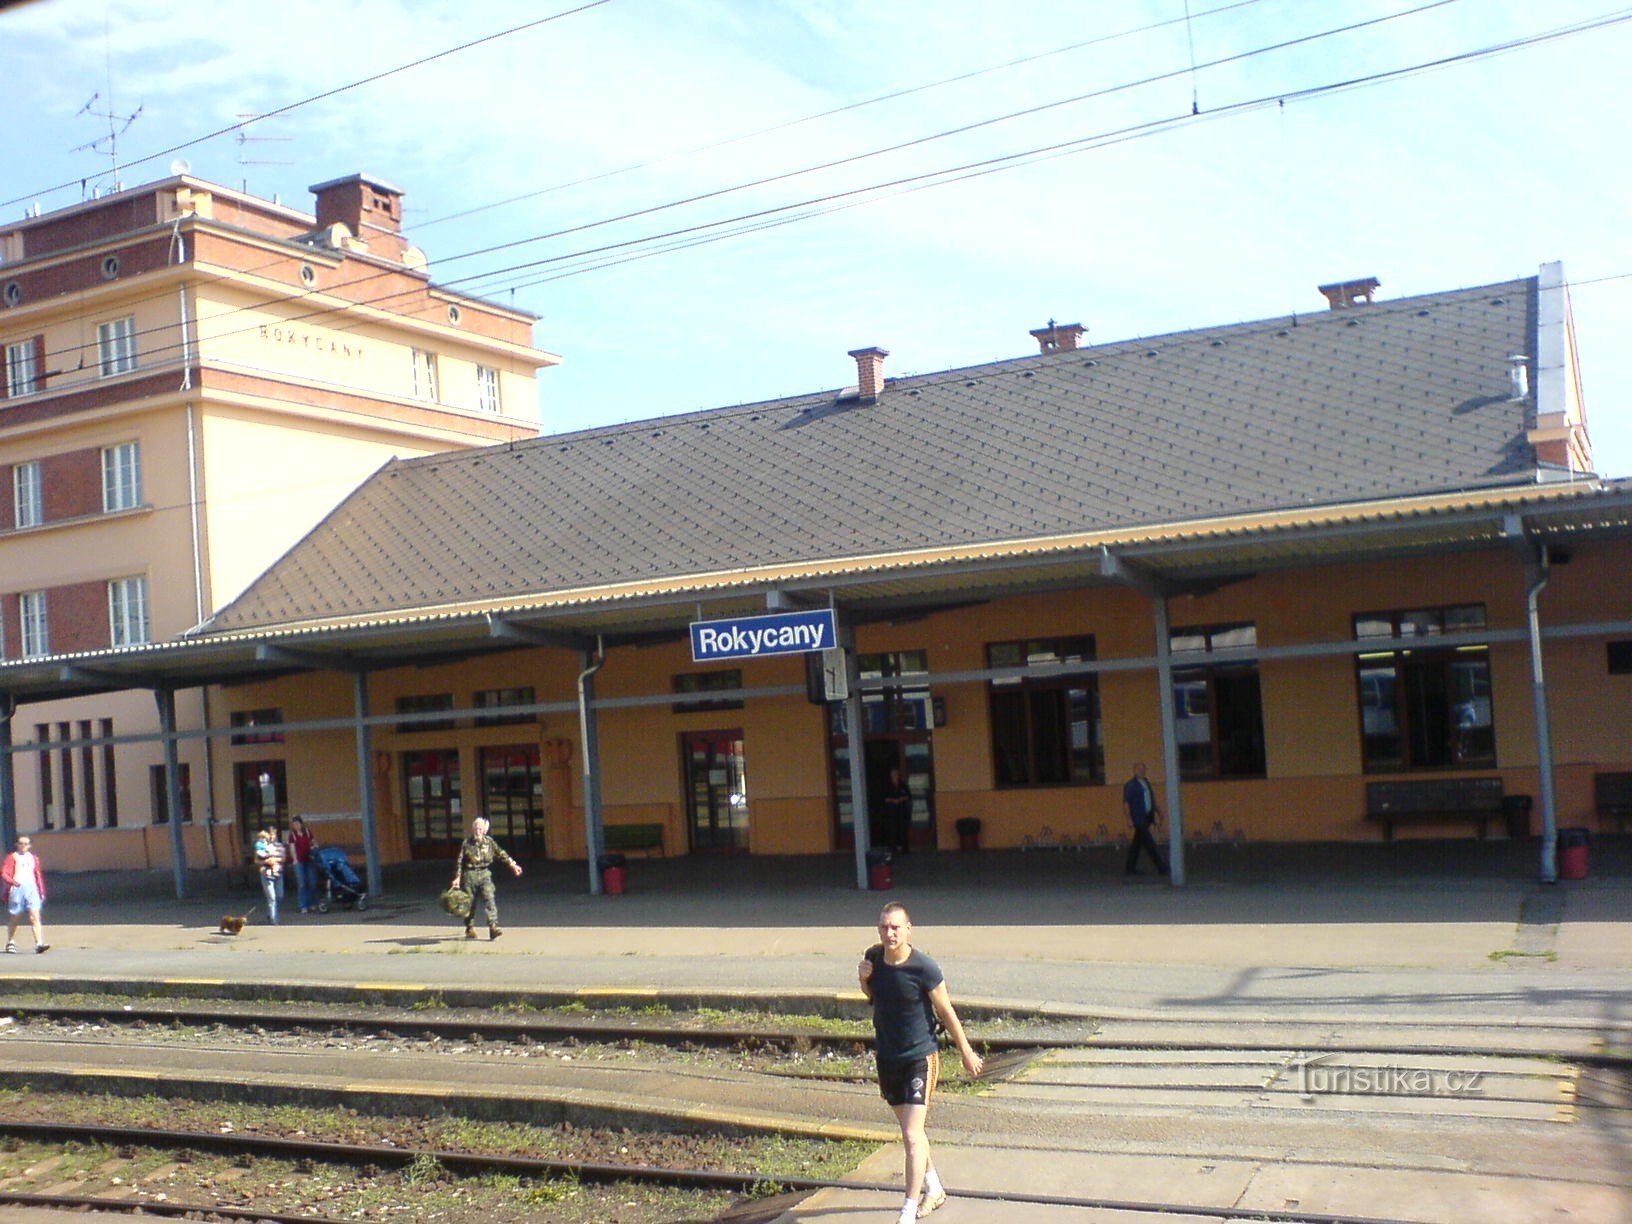 Rokycanyn esikaupunki - rautatieasema